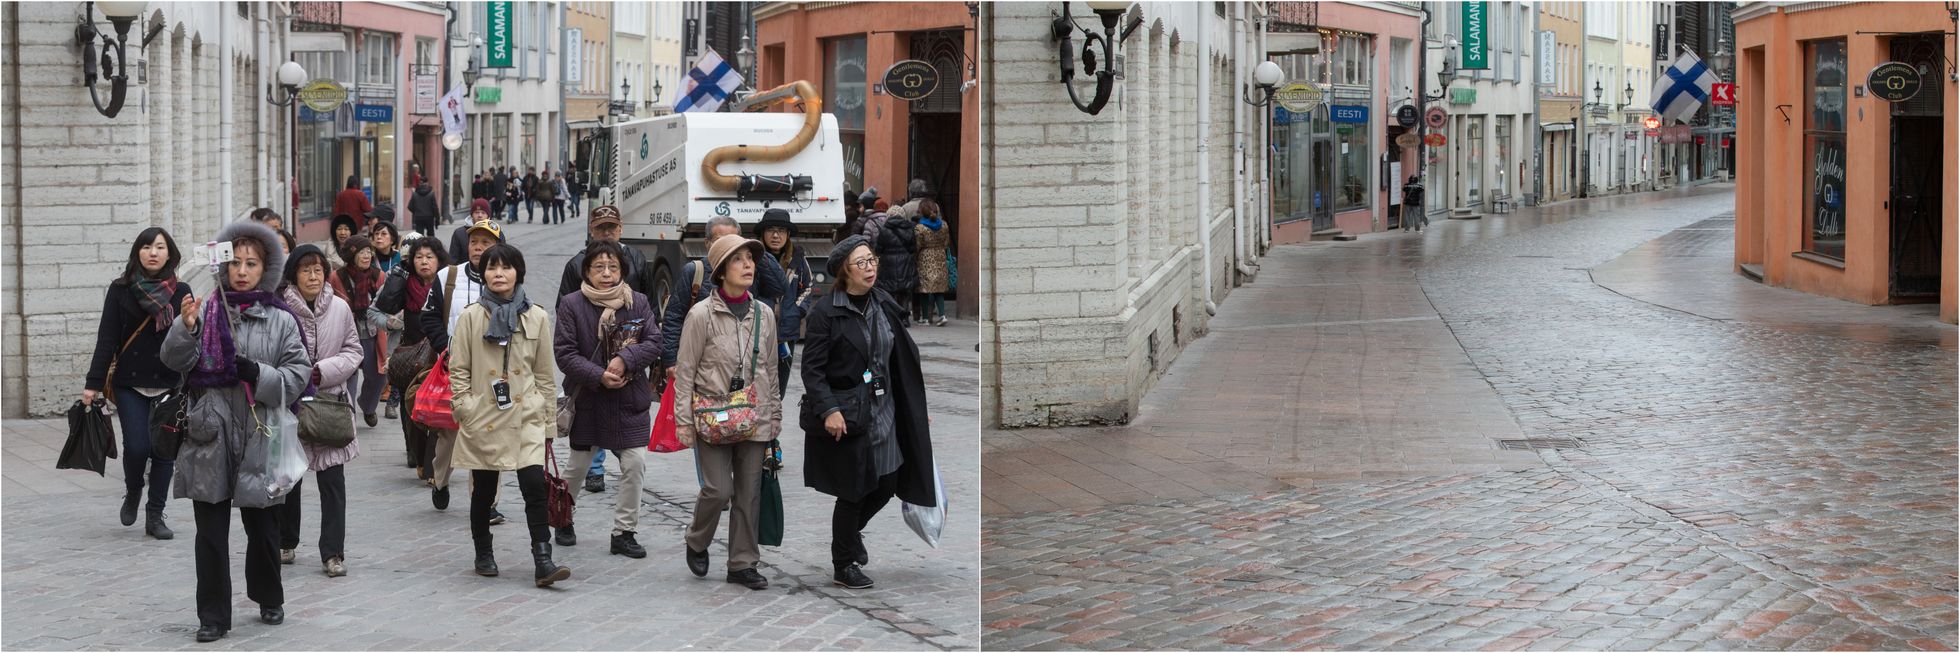 Старый Таллинн: с туристами и без них